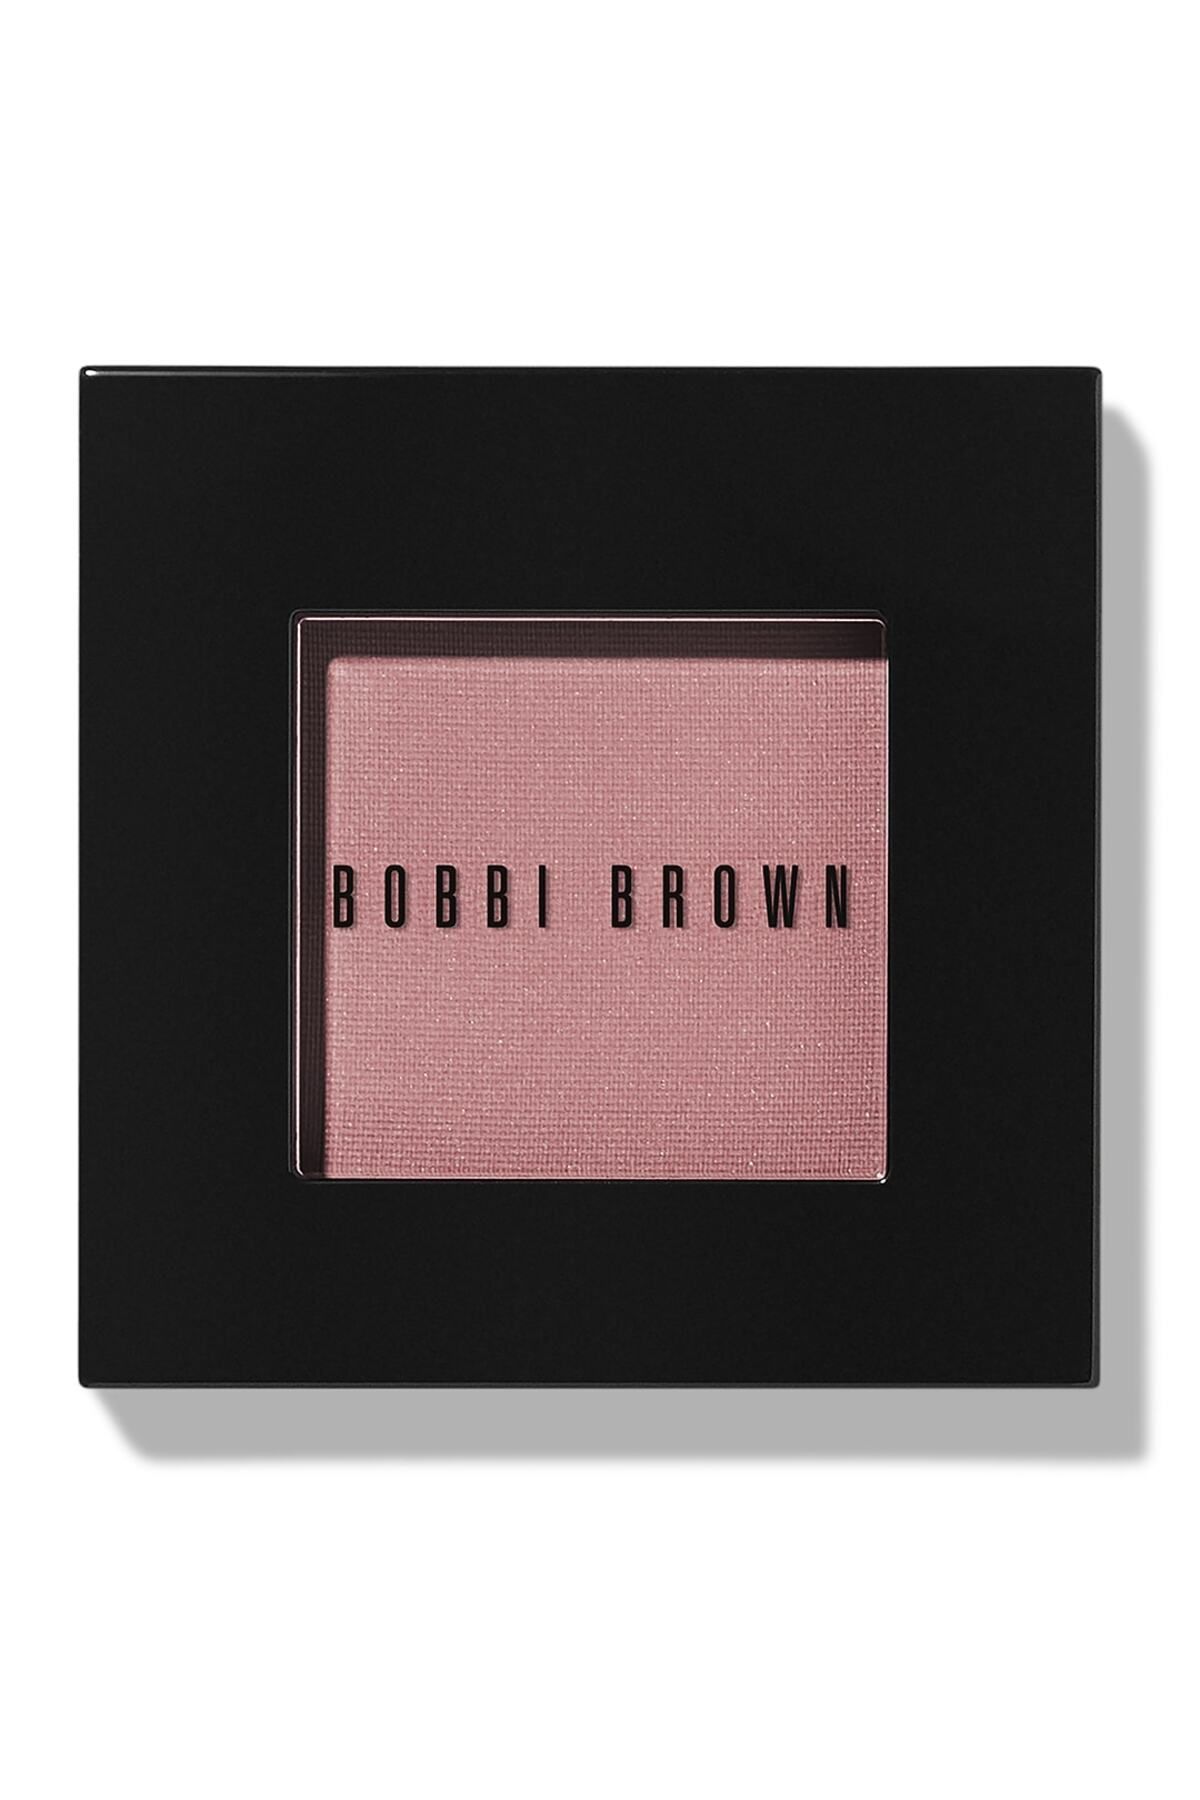 Bobbi Brown Blush / Allık 3.7 G Desert Pink 716170061863